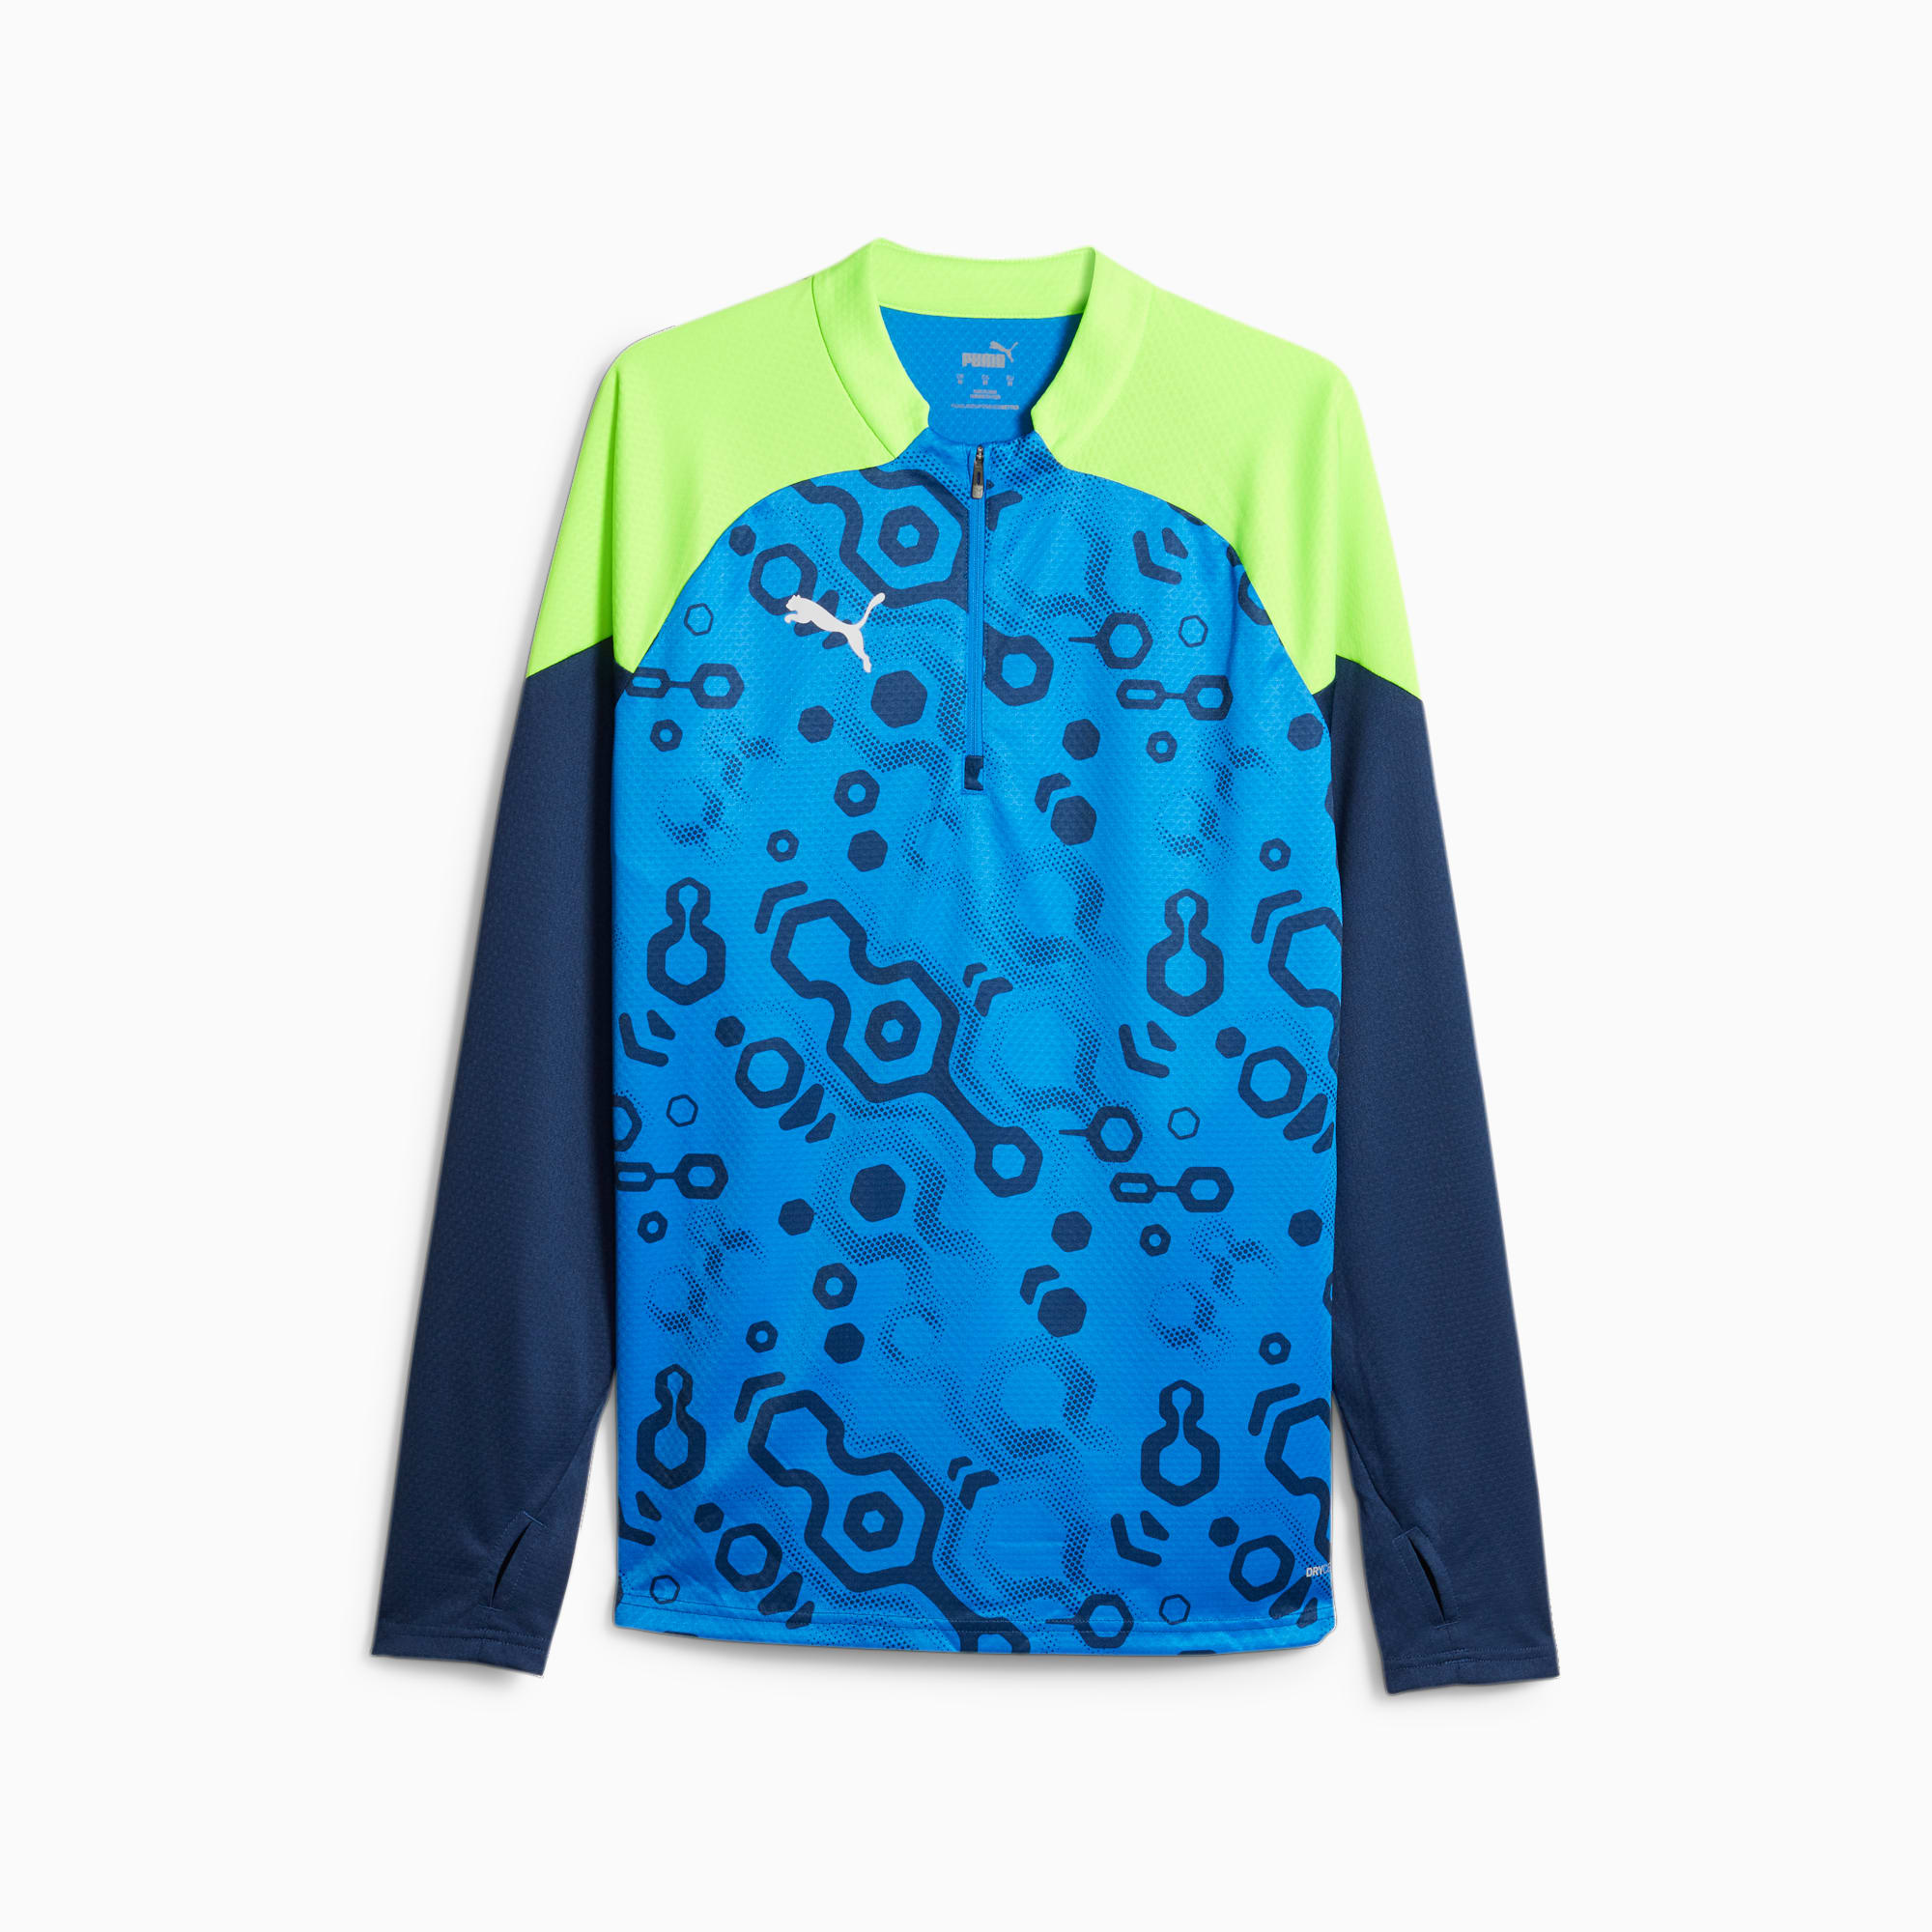 Men's PUMA Individualcup Football Quarter-Zip Top Shirt, Persian Blue/Pro Green, Size XS, Clothing